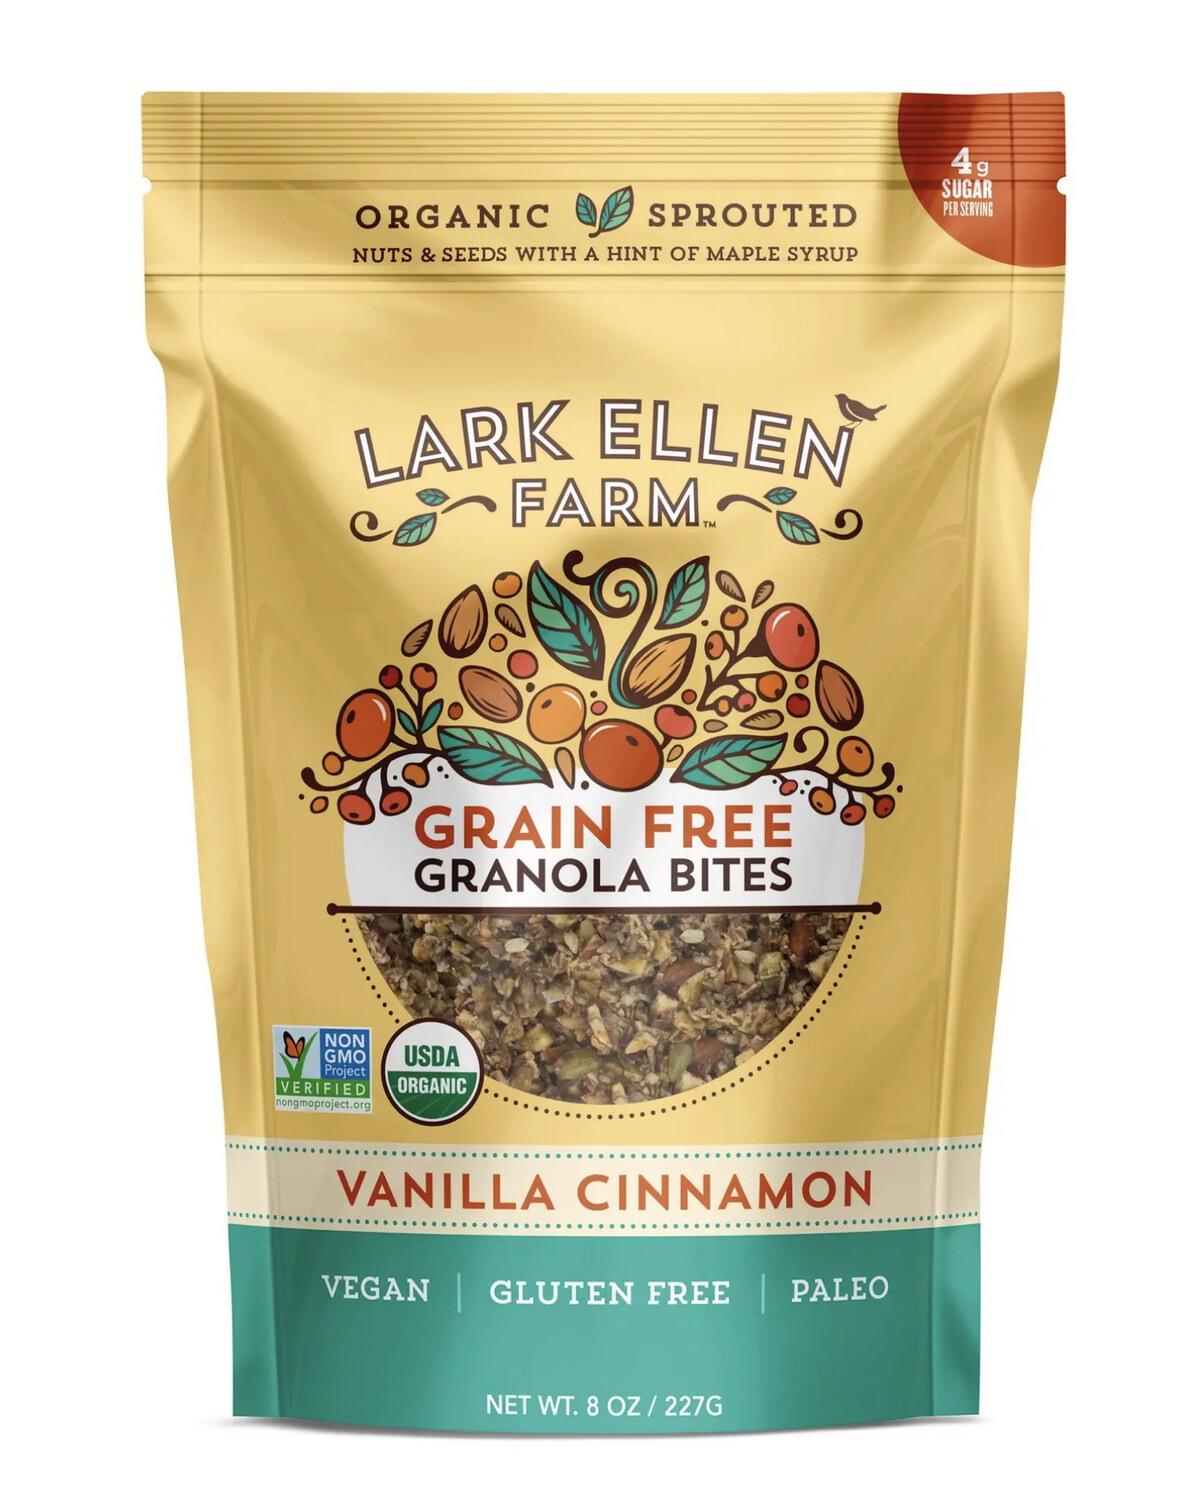 Lark Ellen Farm Sprouted Grain-Free Granola Bites - Organic - various flavors - 8 oz